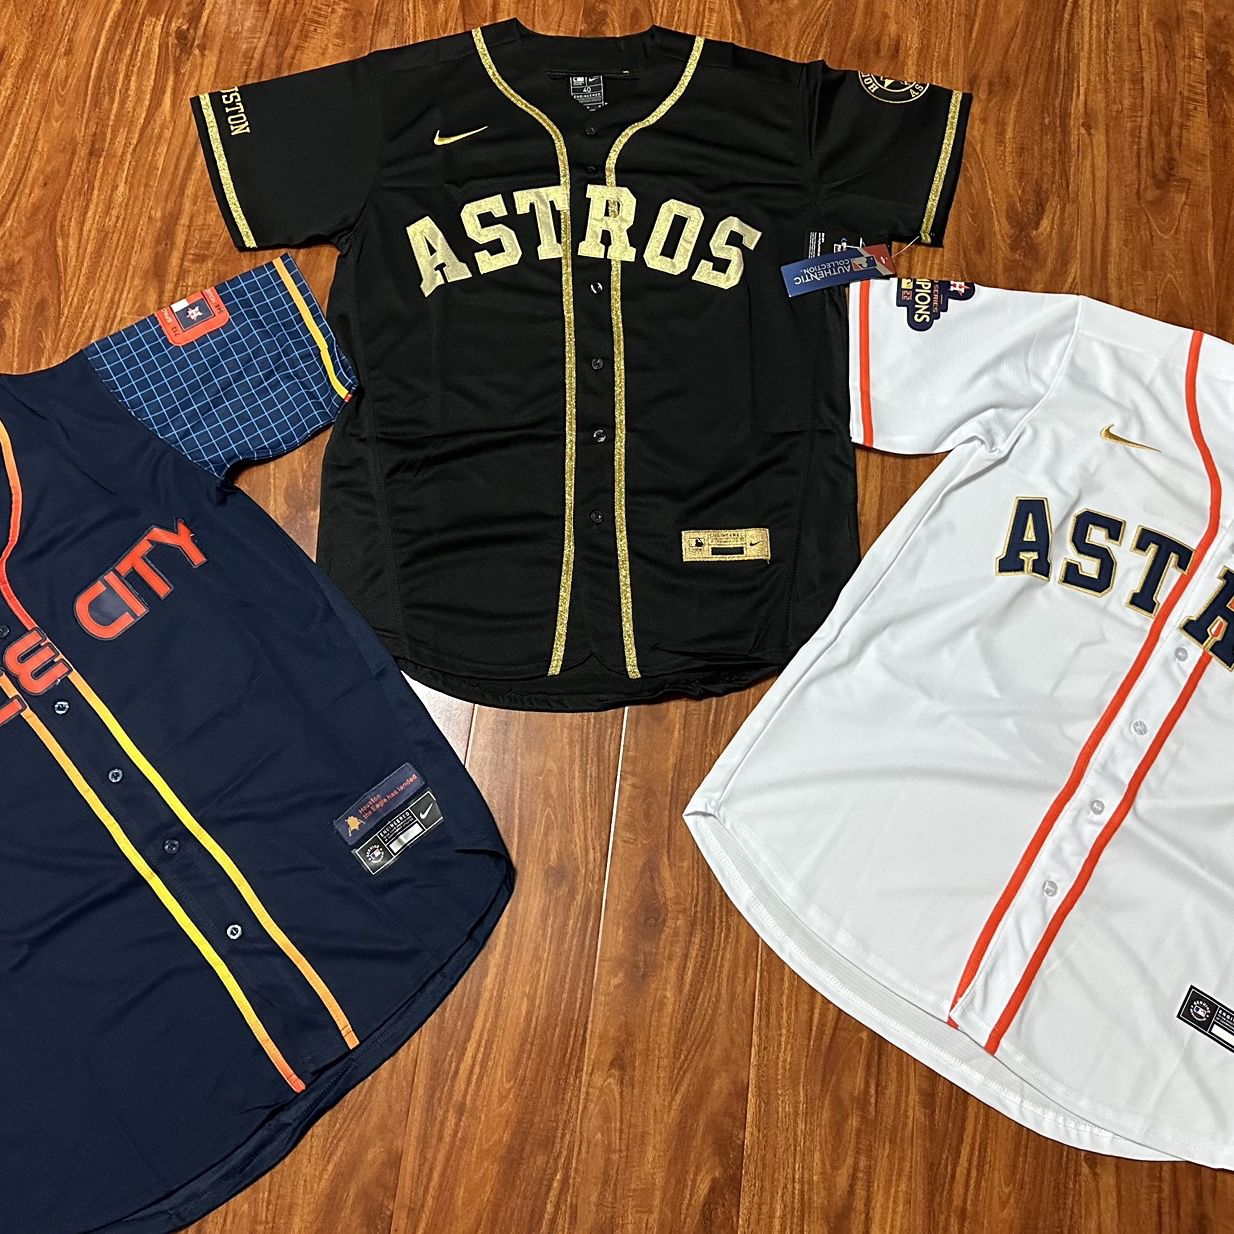 Swishahouse x Astros Alvarez Still Tippin on 44s Custom Shirts for Sale in  Houston, TX - OfferUp